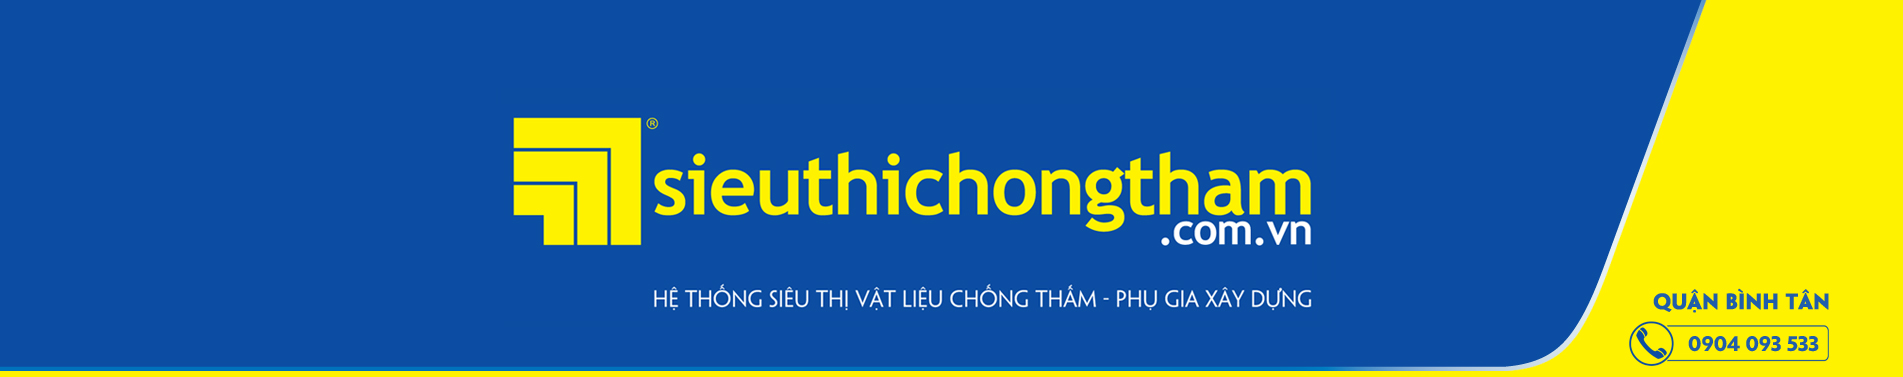 Quan Binh Tan Banner 1